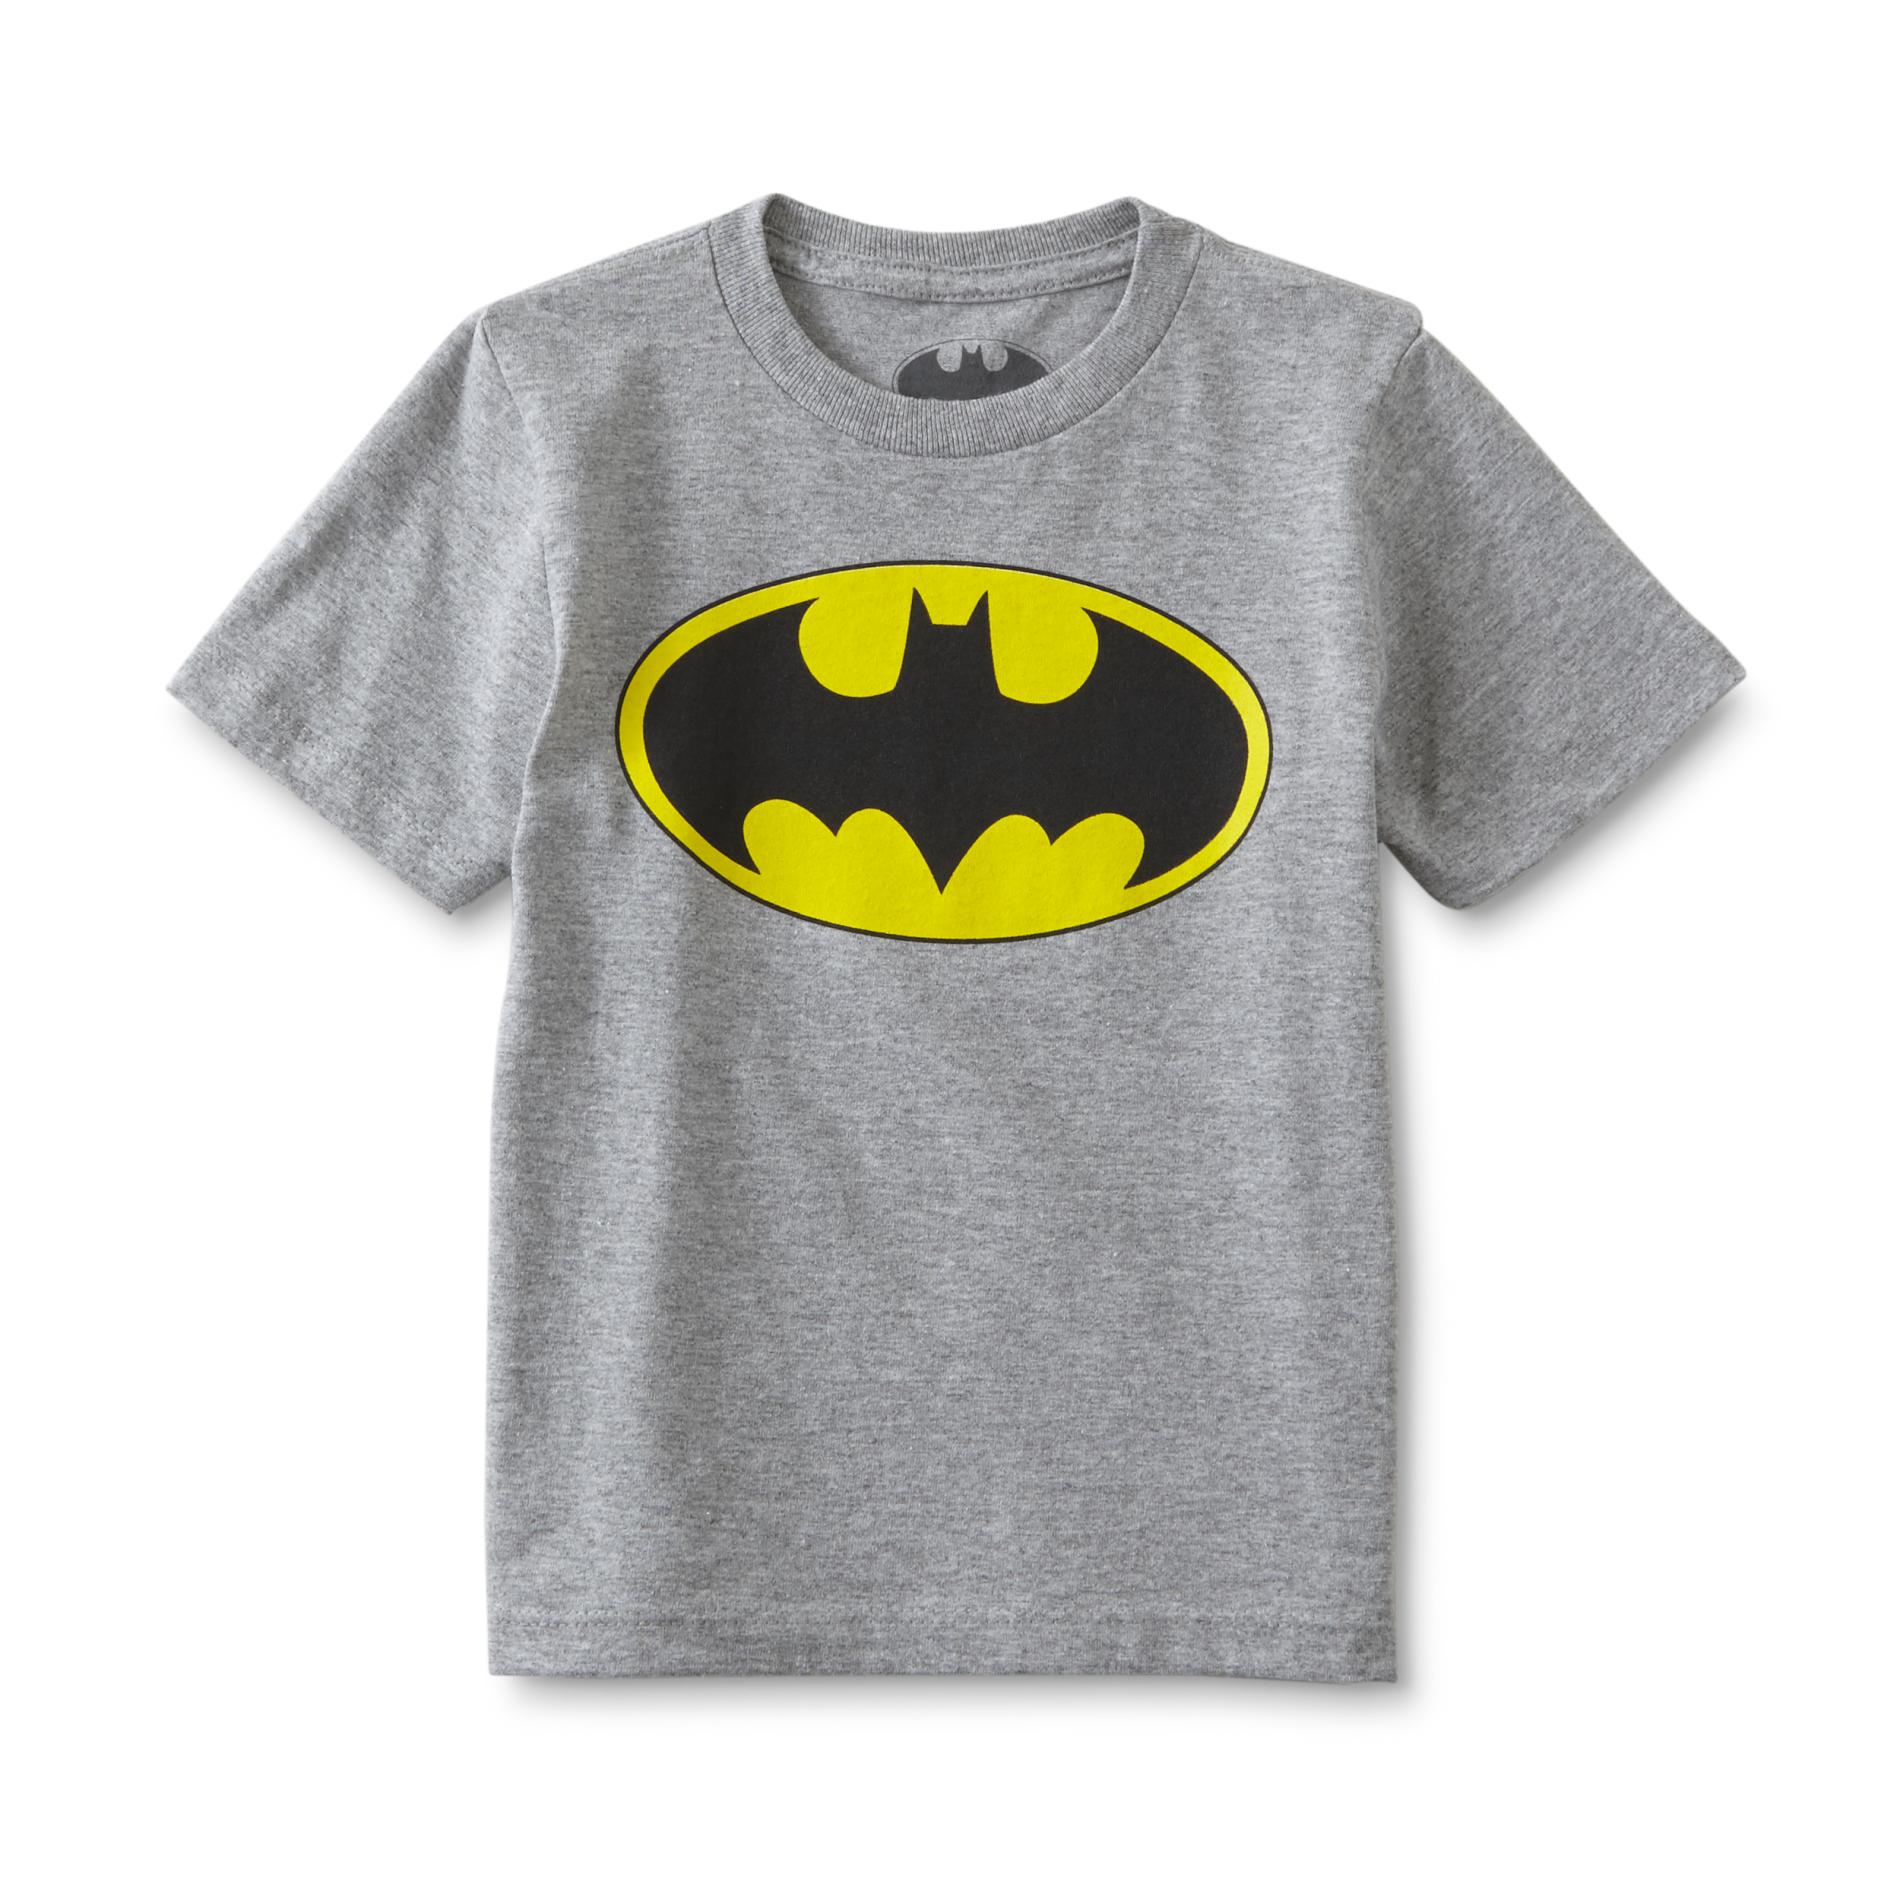 DC Comics Batman Boys' Graphic T-Shirt